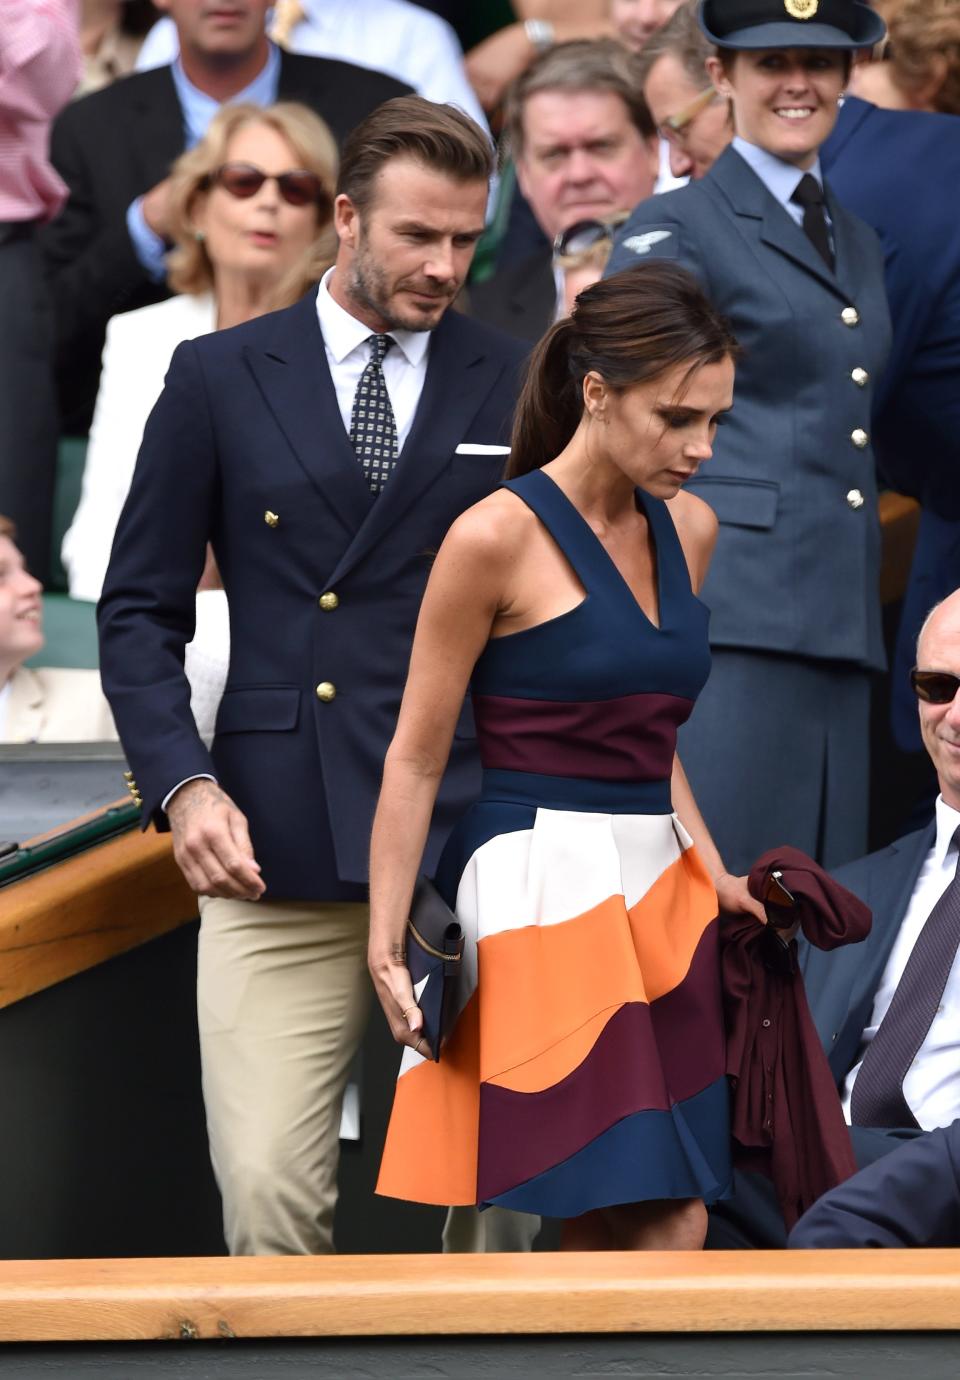 David Beckham and Victoria Beckham at Wimbledon on July 6, 2014 in London, England.